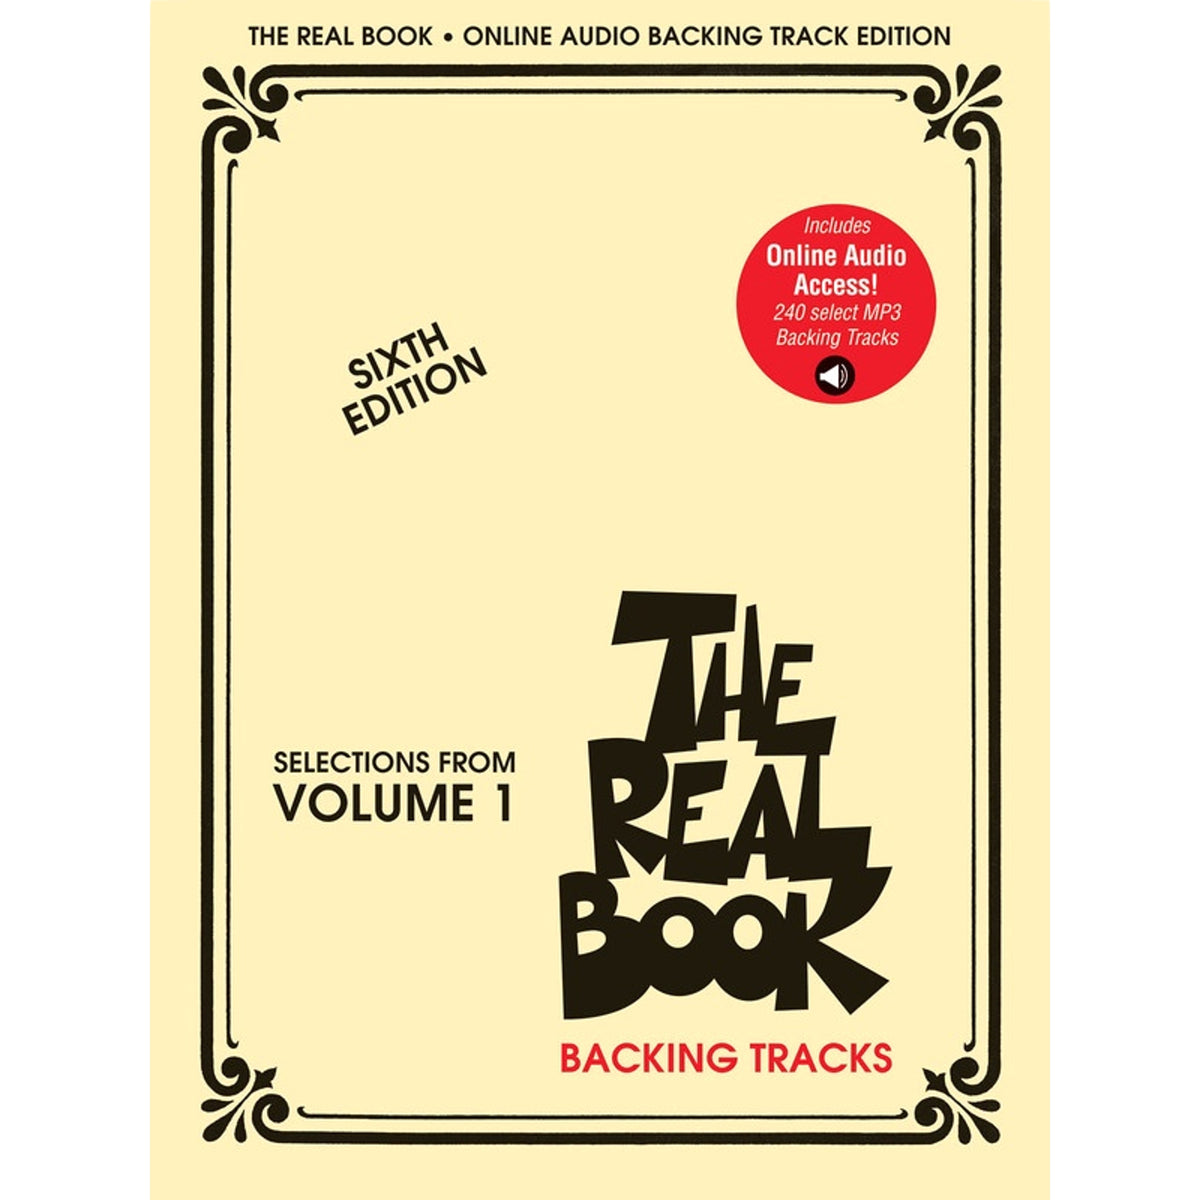 REAL BOOK VOL 1 ONLINE AUDIO TRACKS